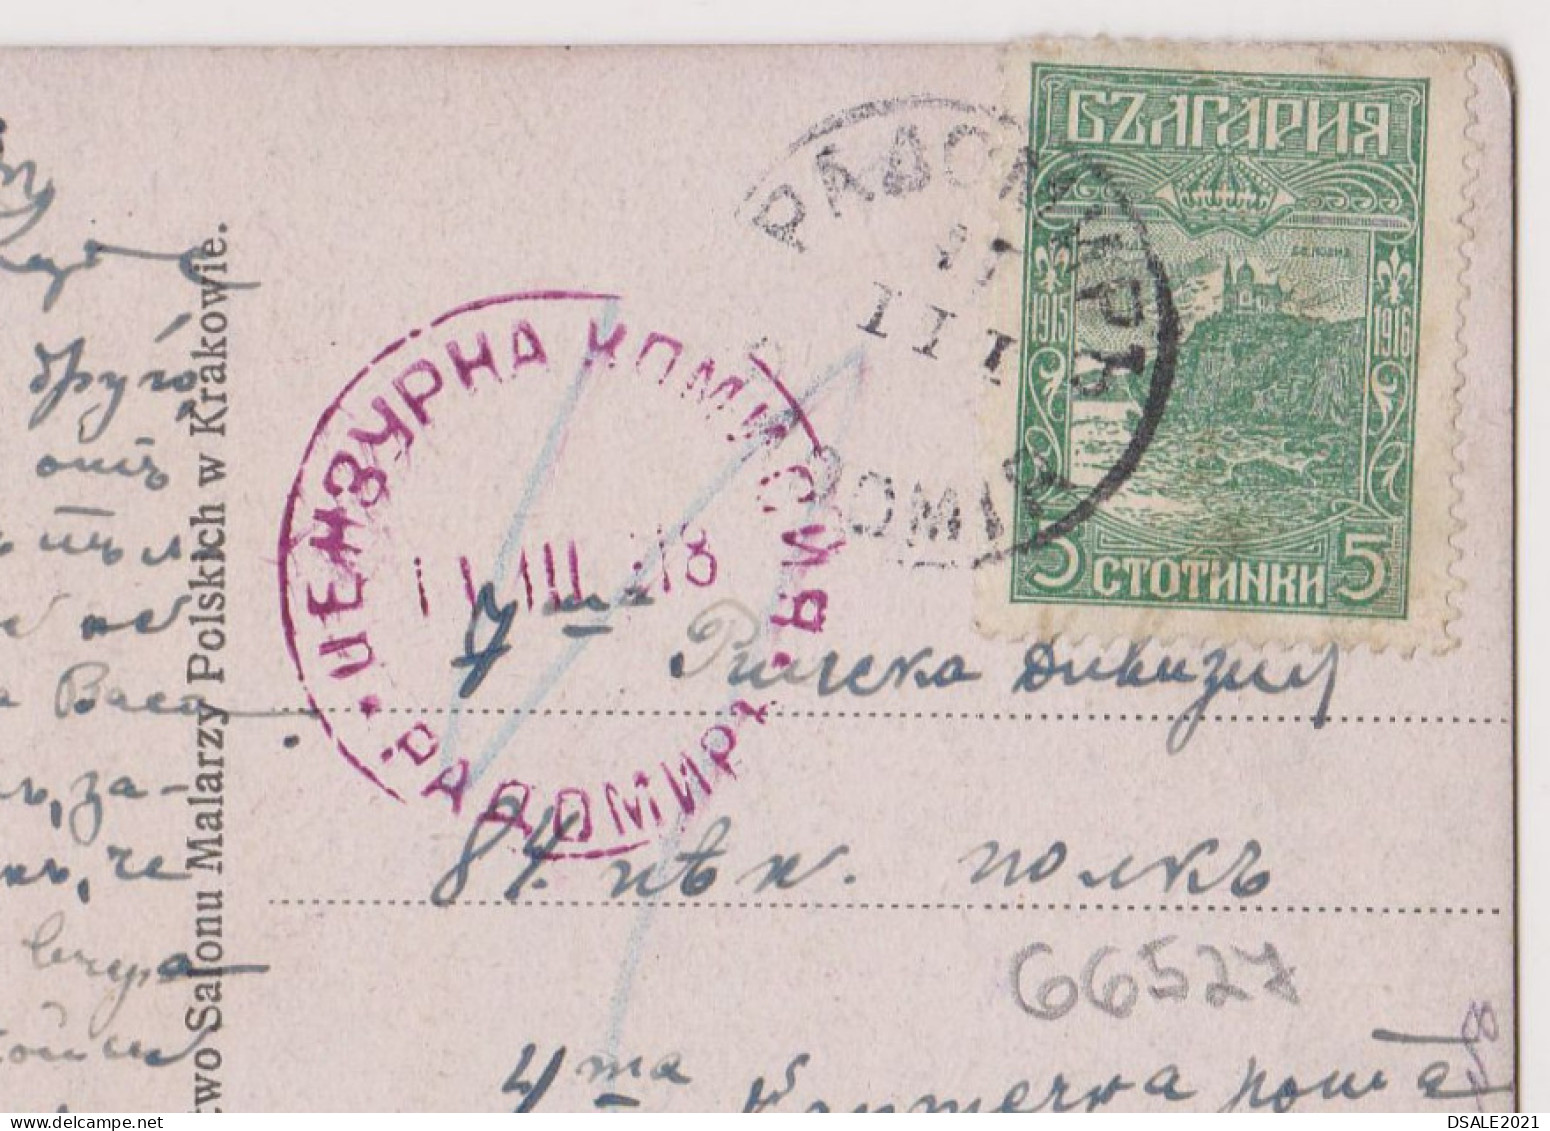 Bulgaria Bulgarien Ww1-1918 Civil Censored RADOMIR Cachet Artist Postcard By K. Szczawinski Boy W/Violin Postcard /66527 - Oorlog